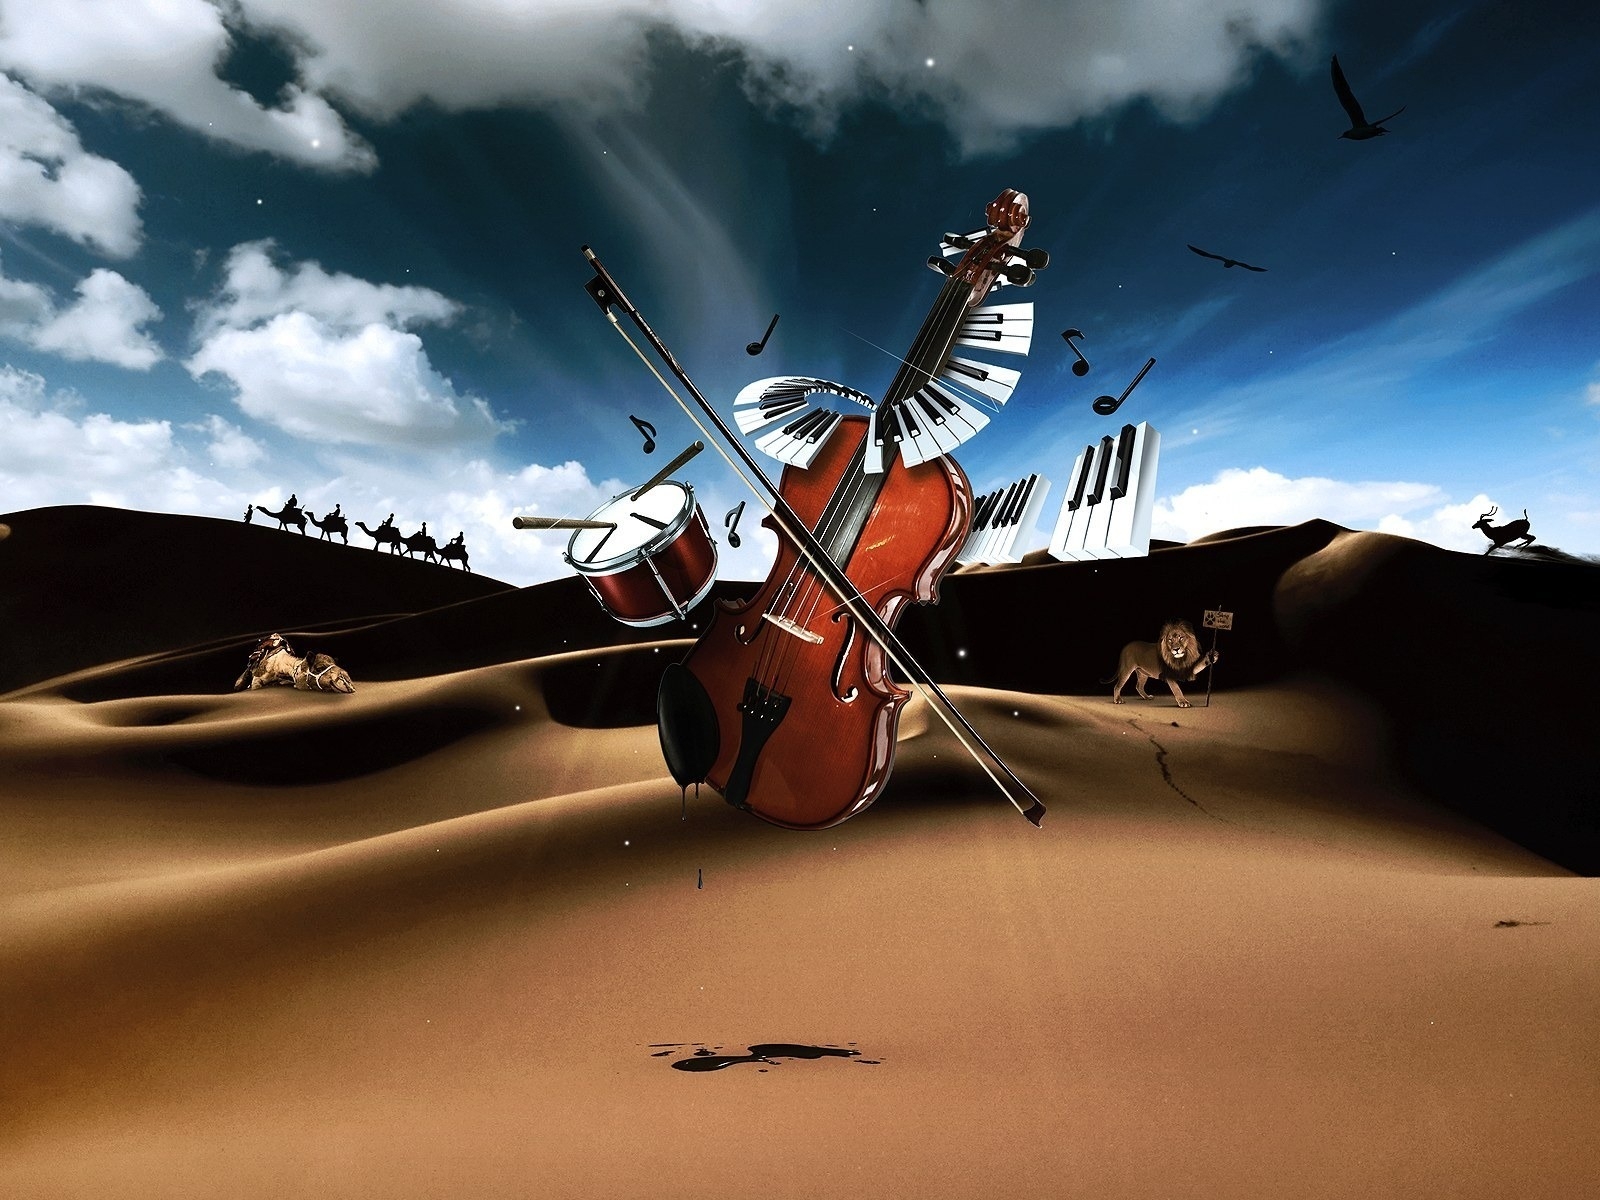 Drum, Violin, Piano in Desert for 1600 x 1200 resolution